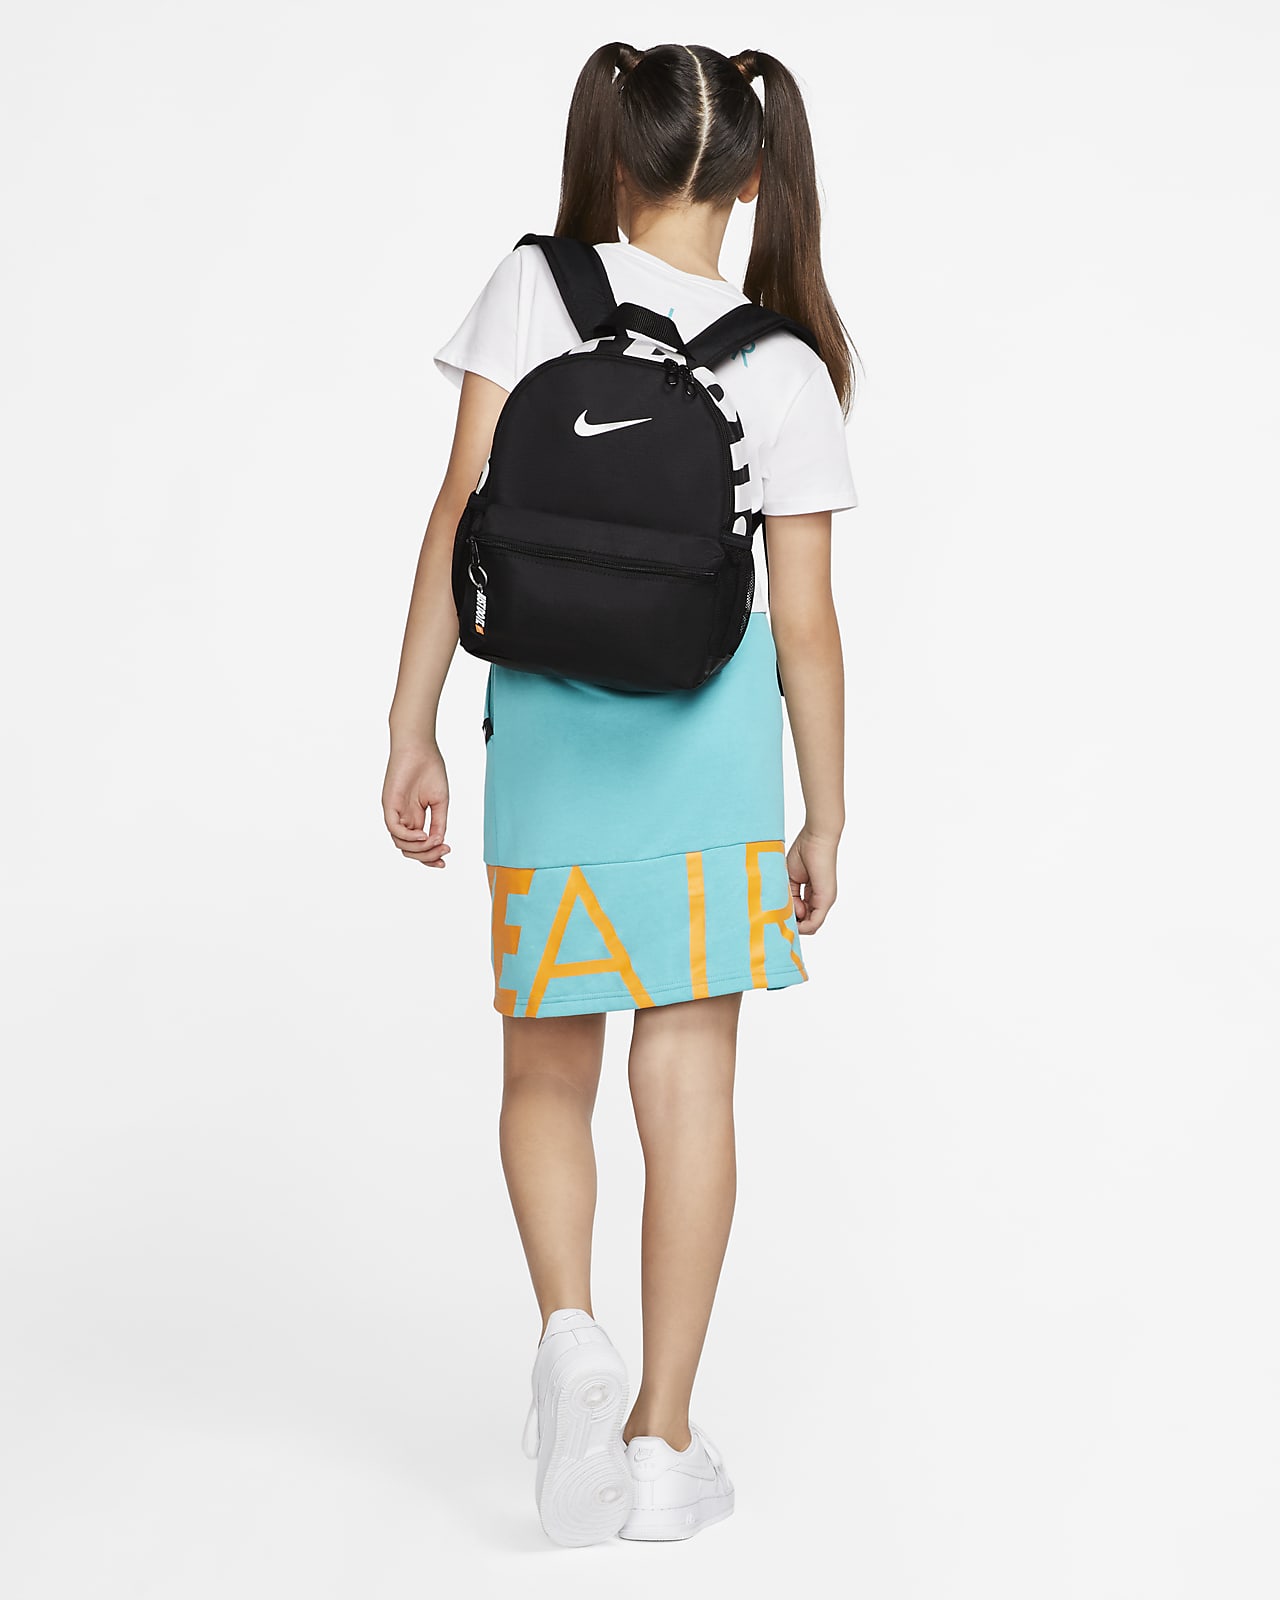 Ir al circuito algun lado Congelar Nike Backpack Small Size Italy, SAVE 44% - aveclumiere.com